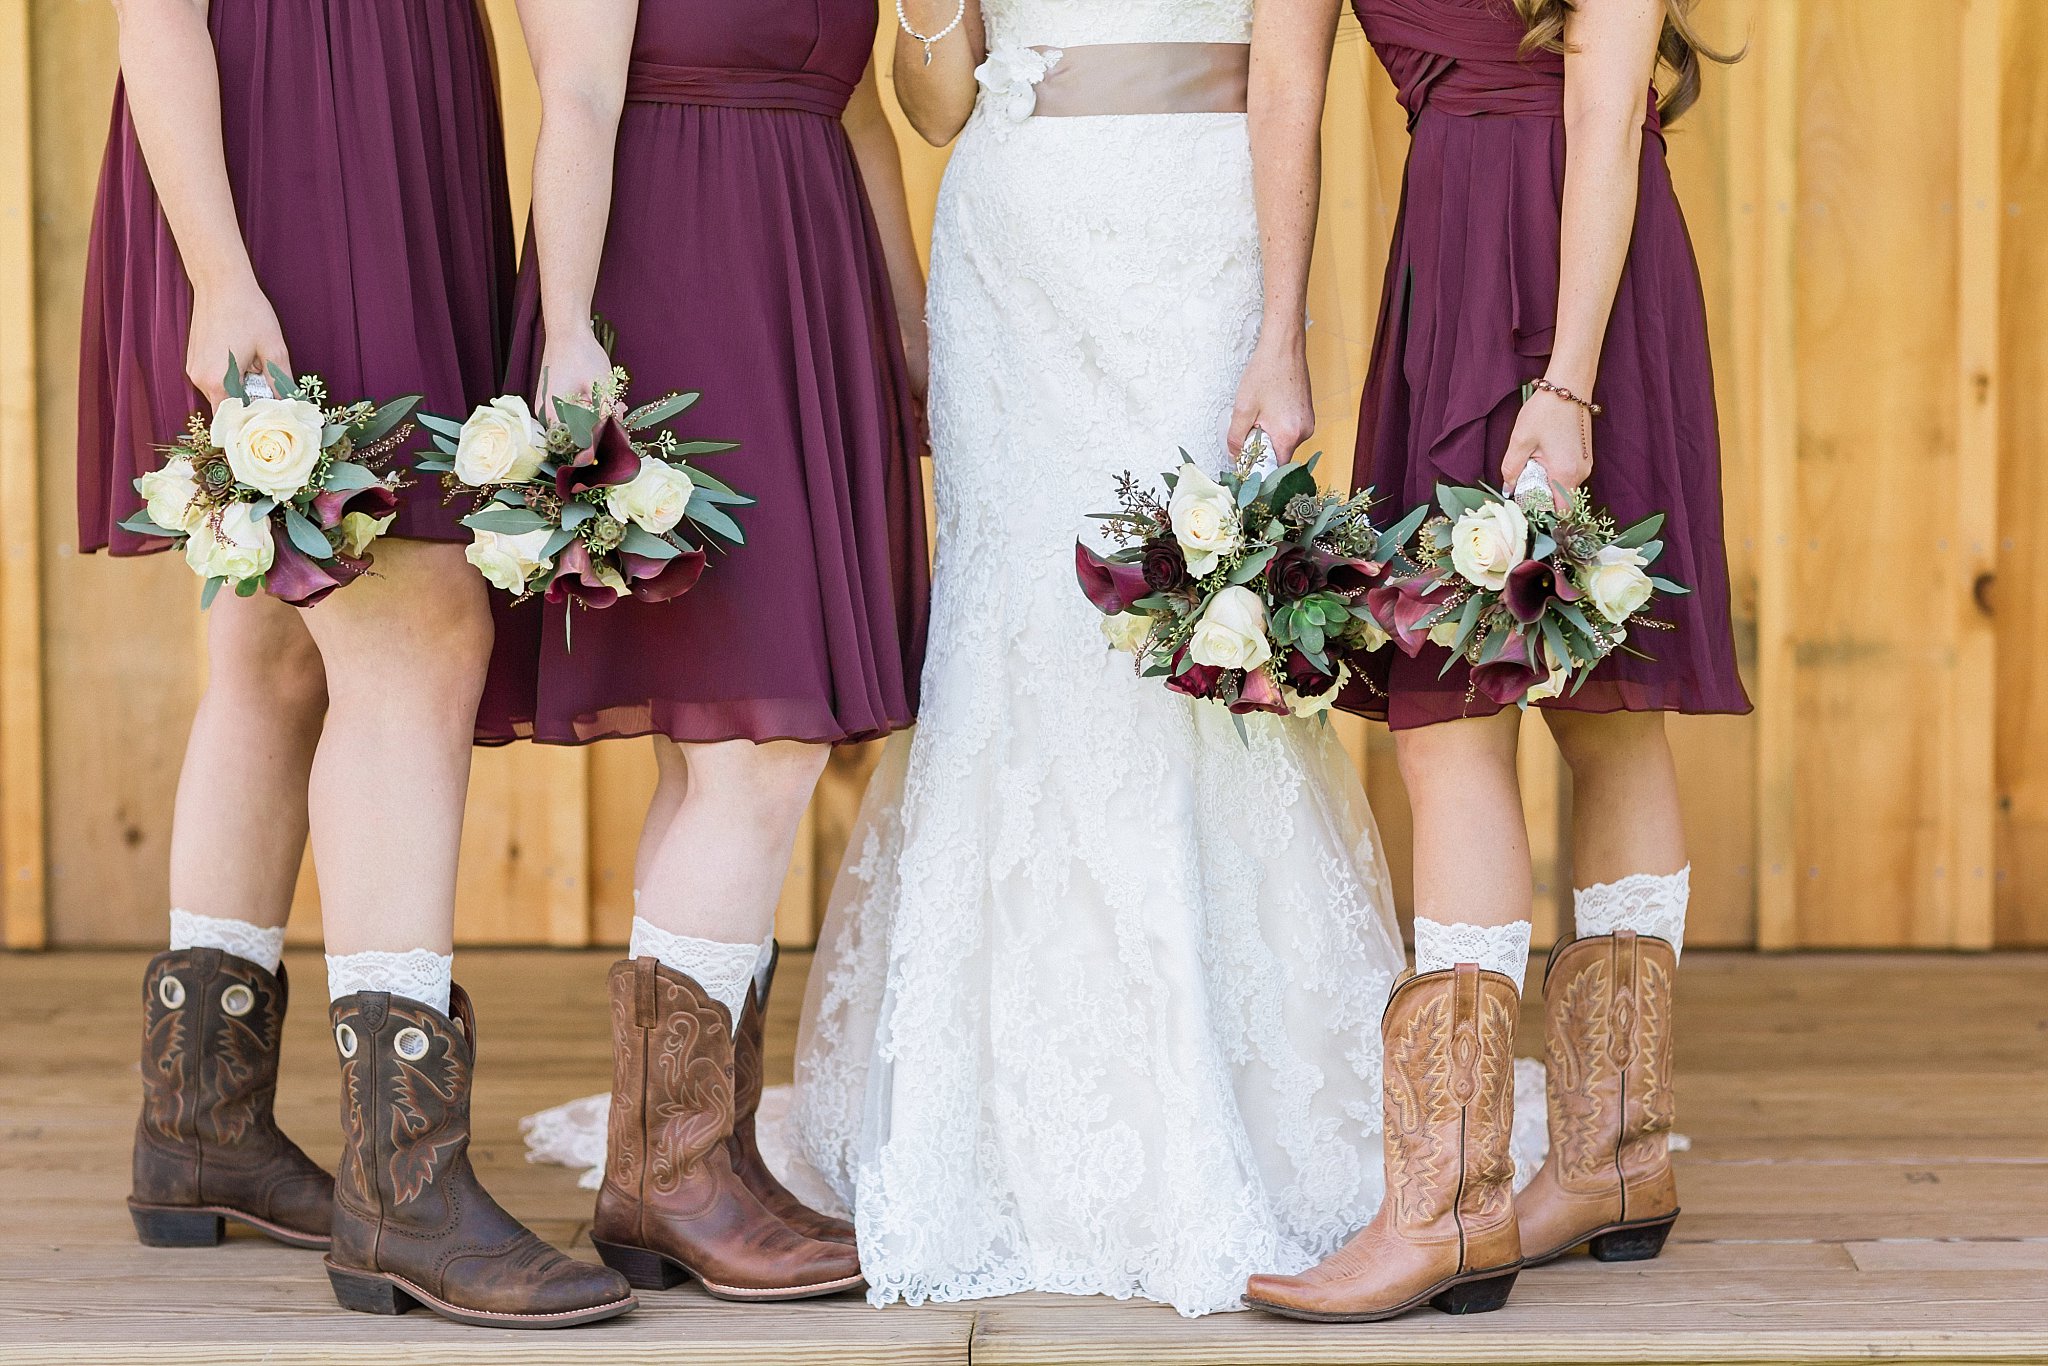 Country bride wedding dress + Bridesmaids boots